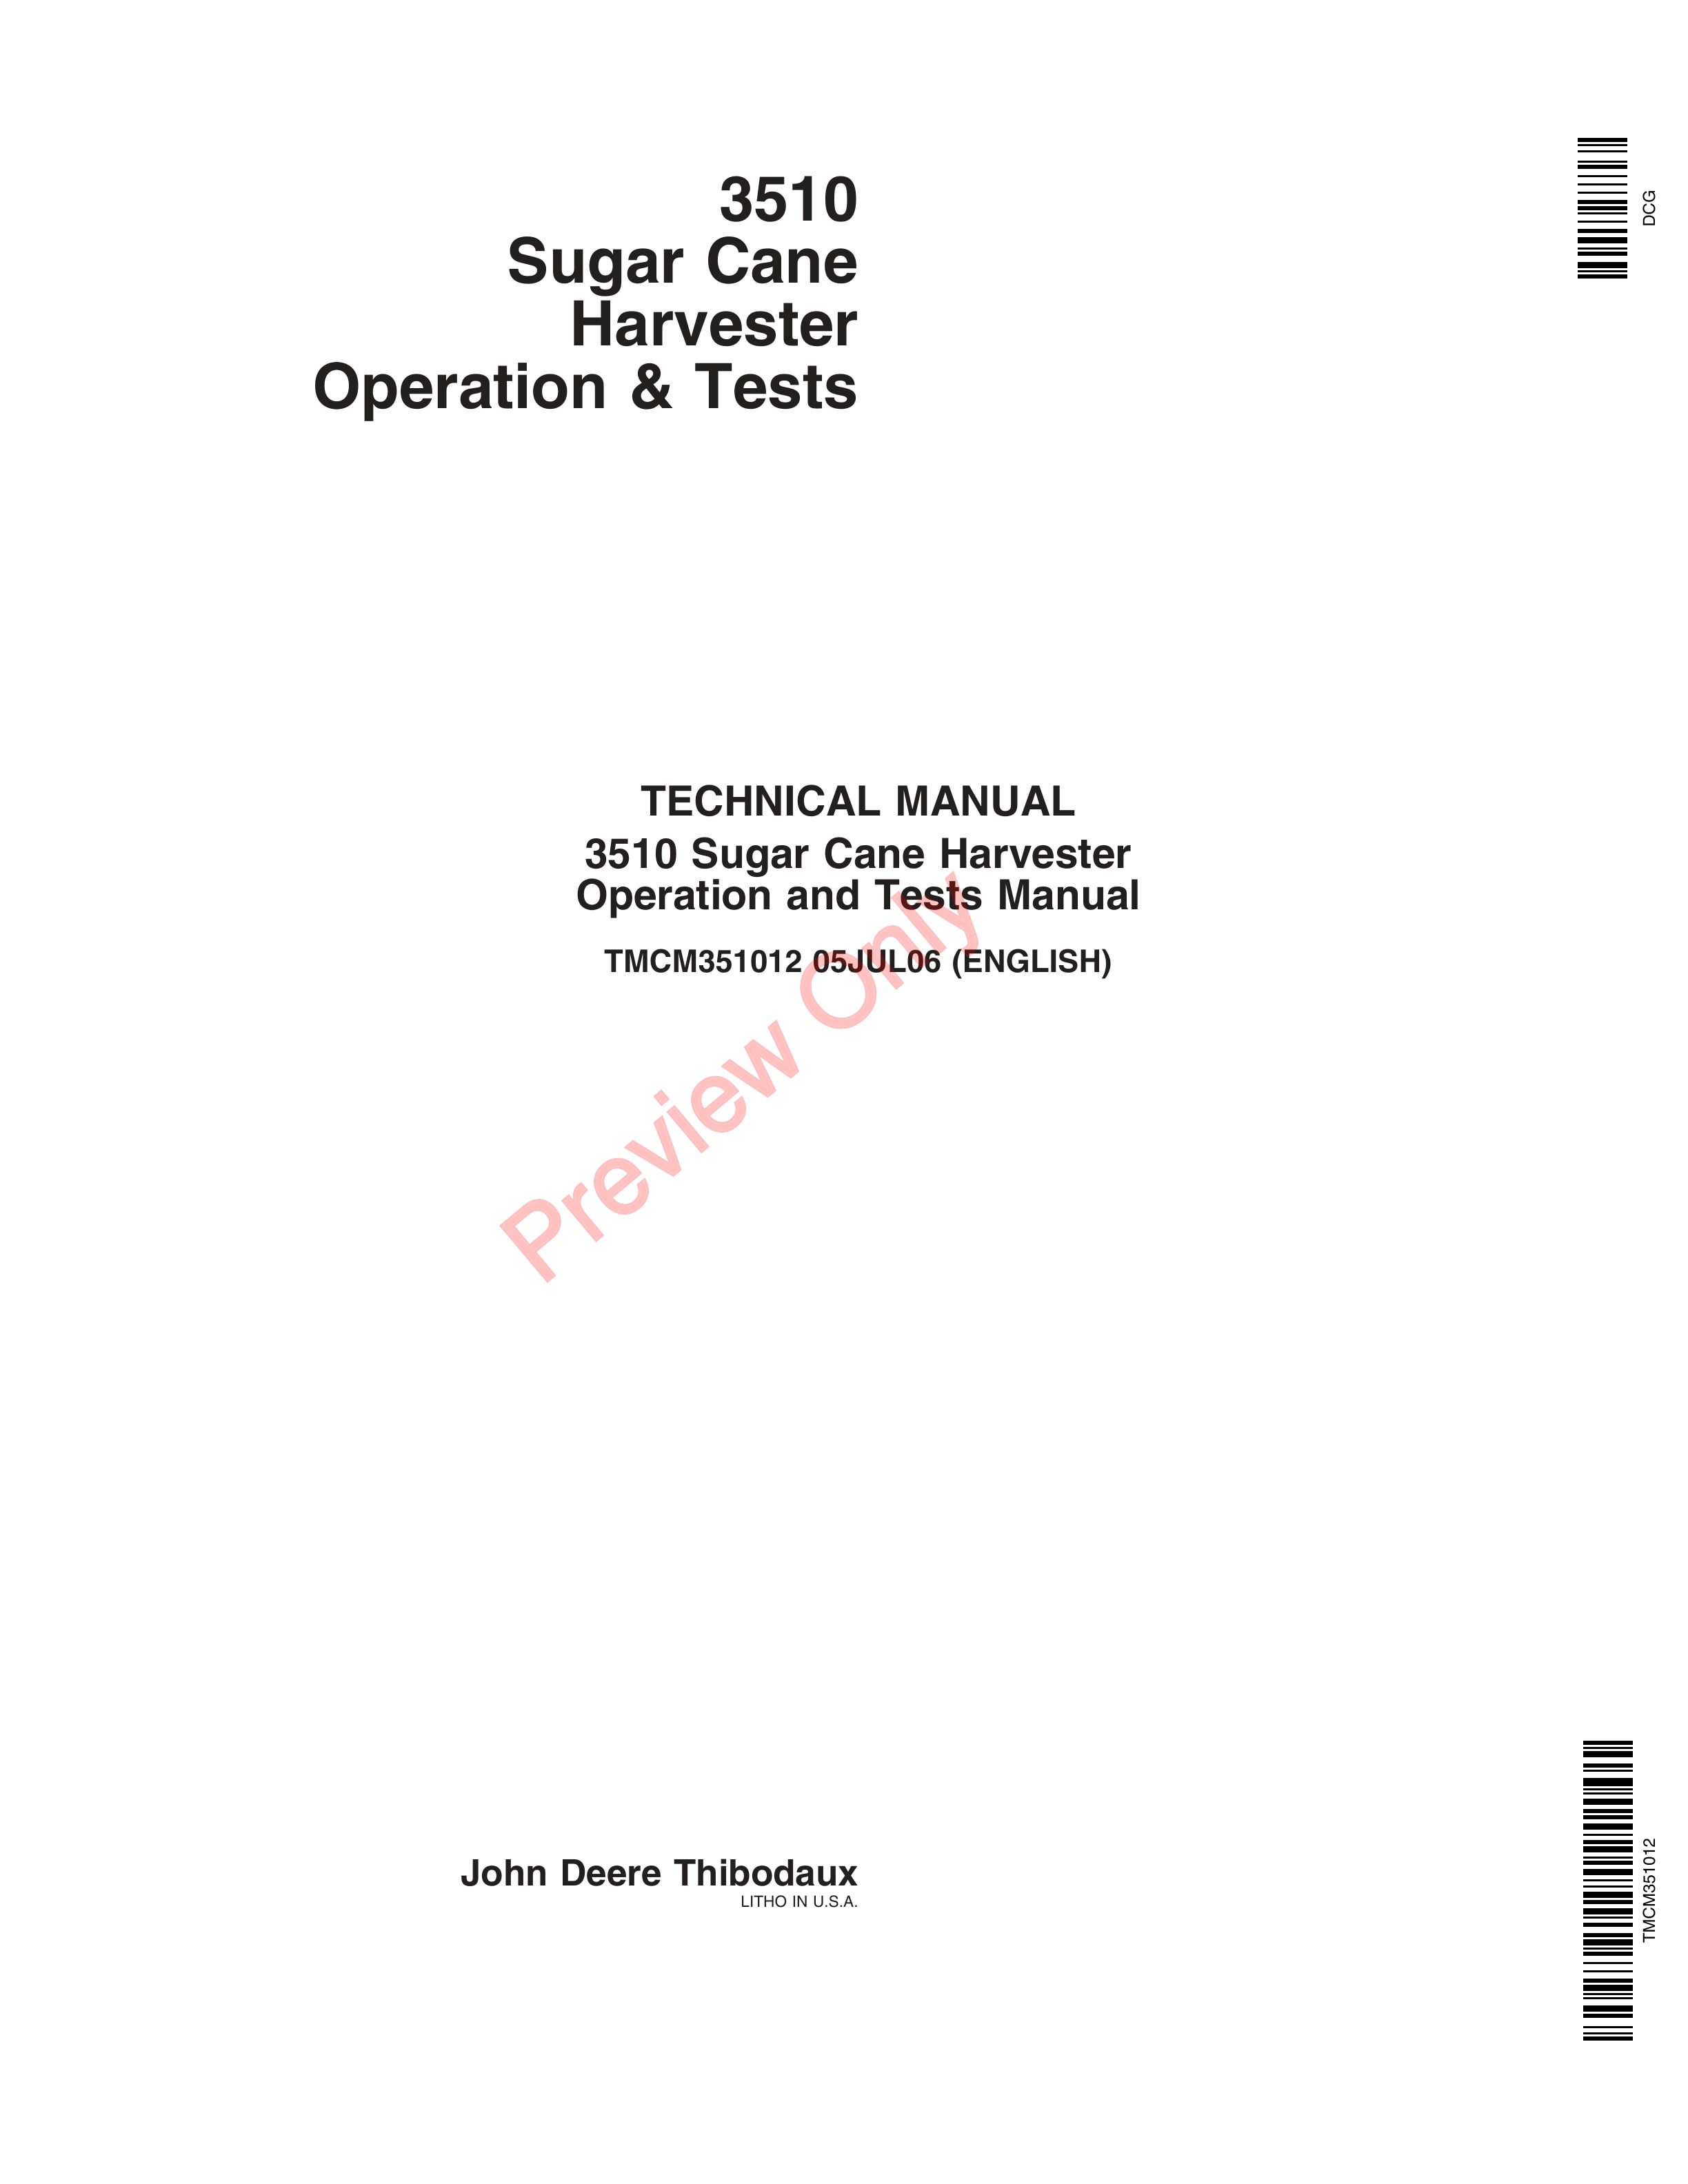 John Deere Harvester 3510 Sugar Cane Technical Manual TMCM351012 05JUL06 1